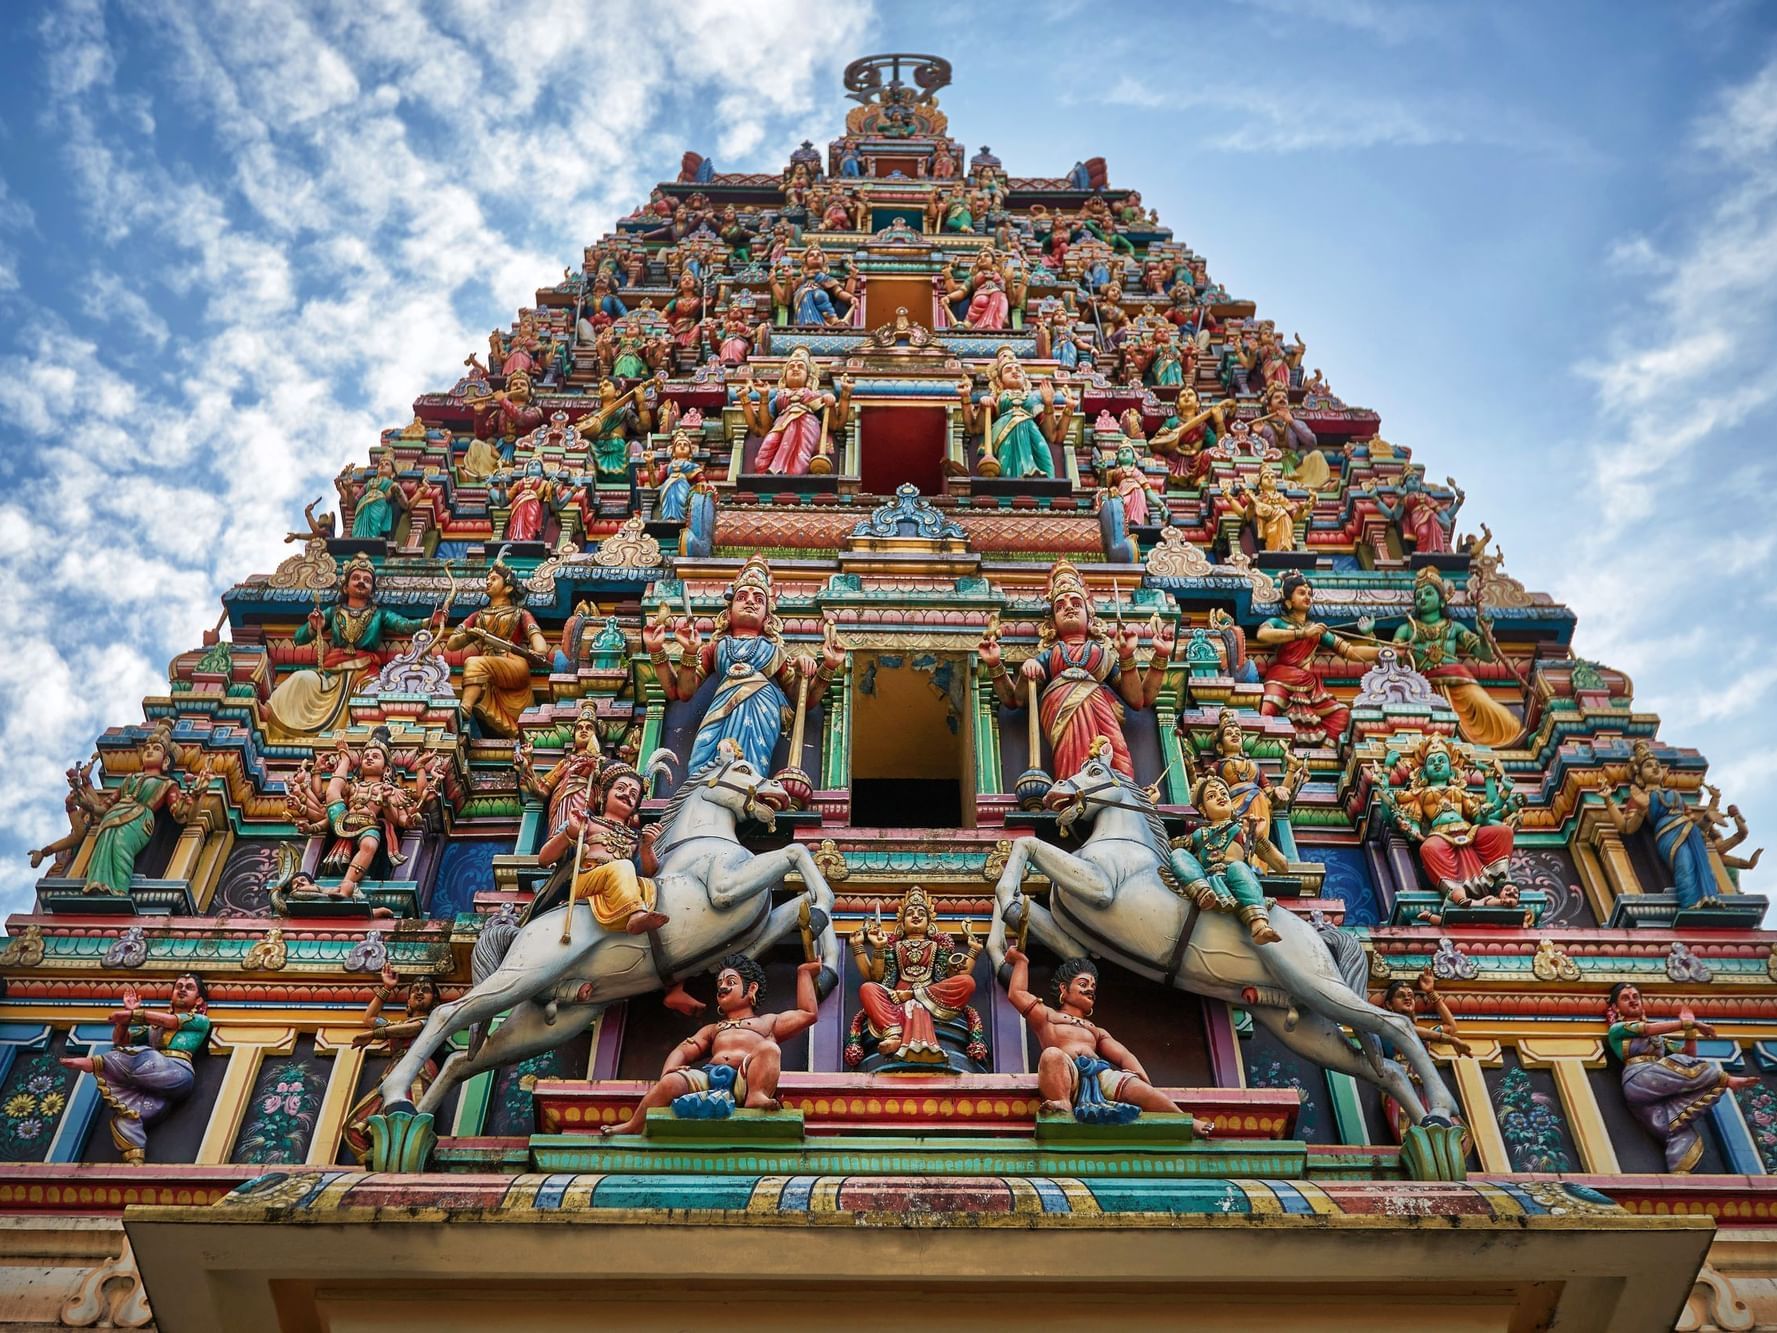 Low angle shot of Sri Mahamariamman temple
near Gardens hotels